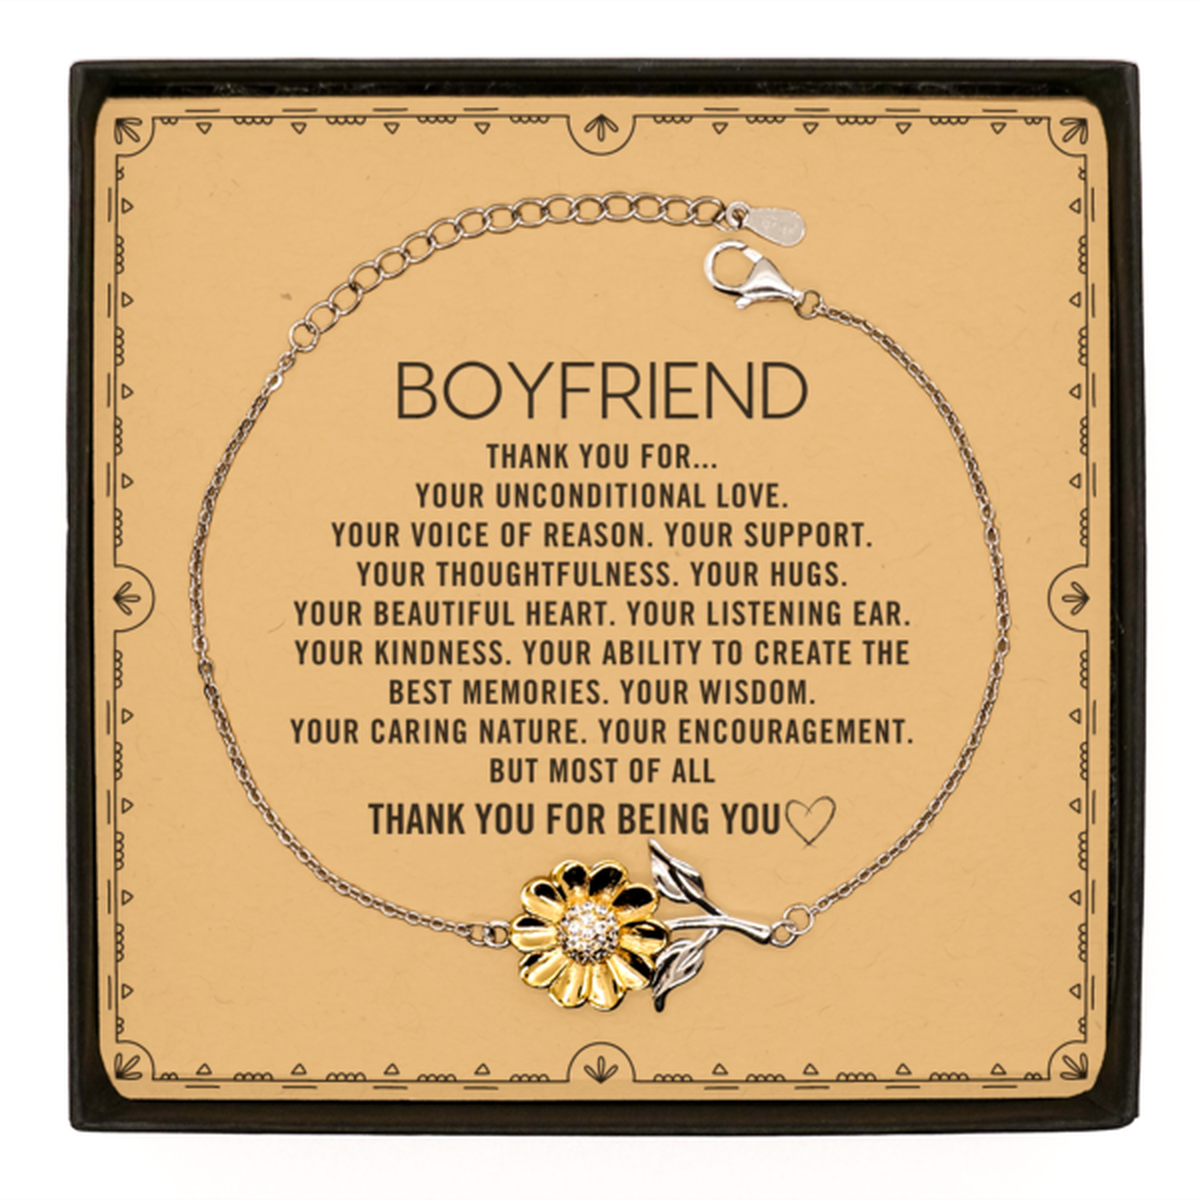 Boyfriend Sunflower Bracelet Custom, Message Card Gifts For Boyfriend Christmas Graduation Birthday Gifts for Men Women Boyfriend Thank you for Your unconditional love